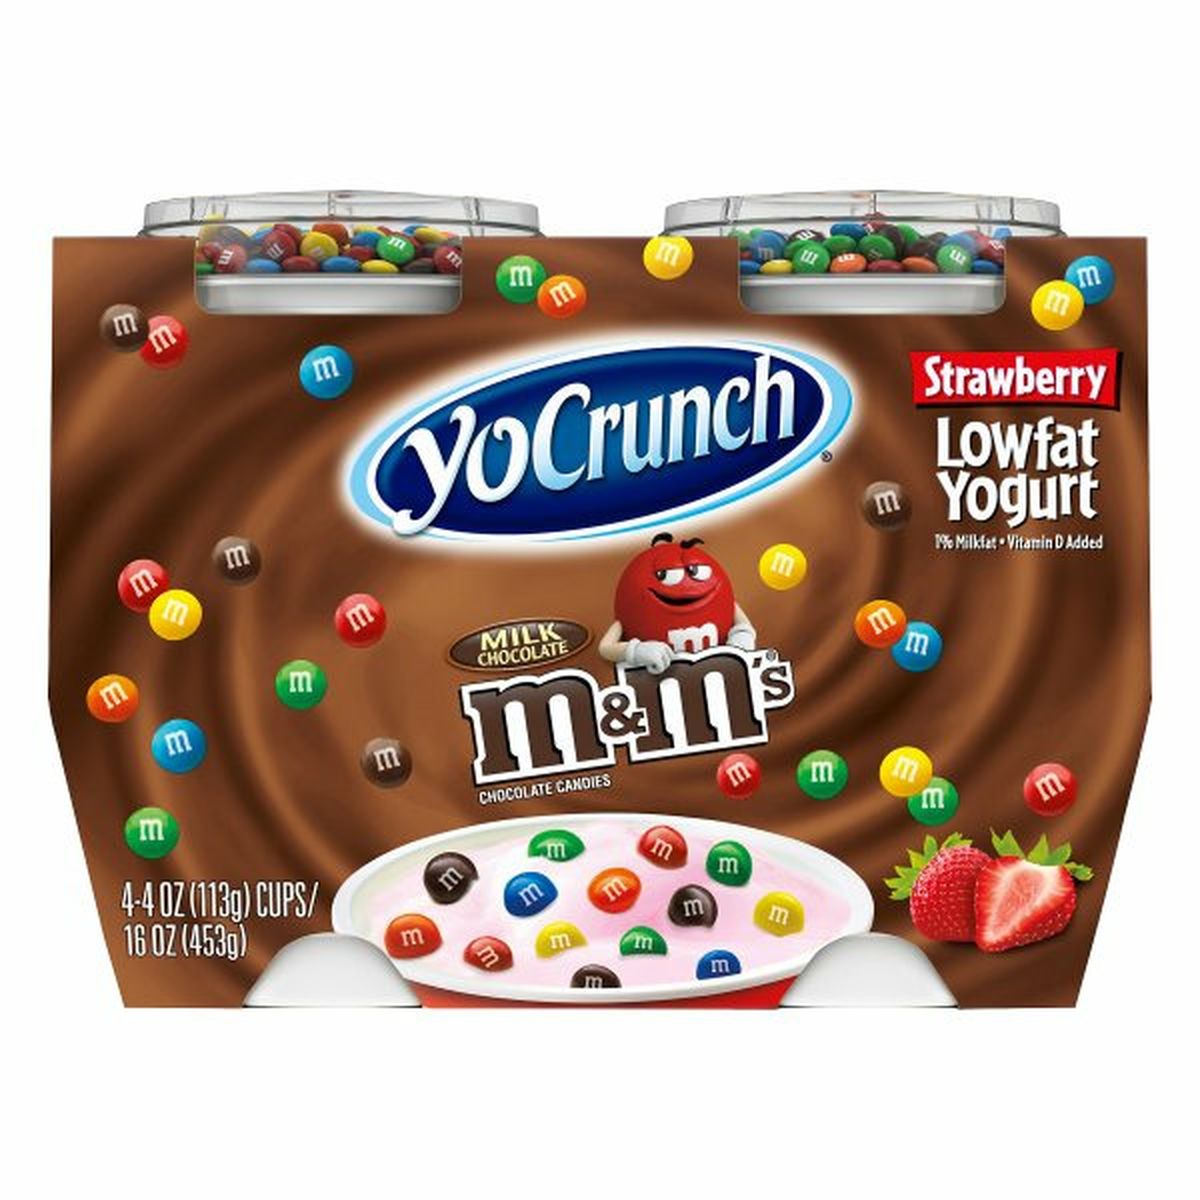 Calories in YoCrunch Yogurt, Lowfat, Strawberry, M&M's Milk Chocolate